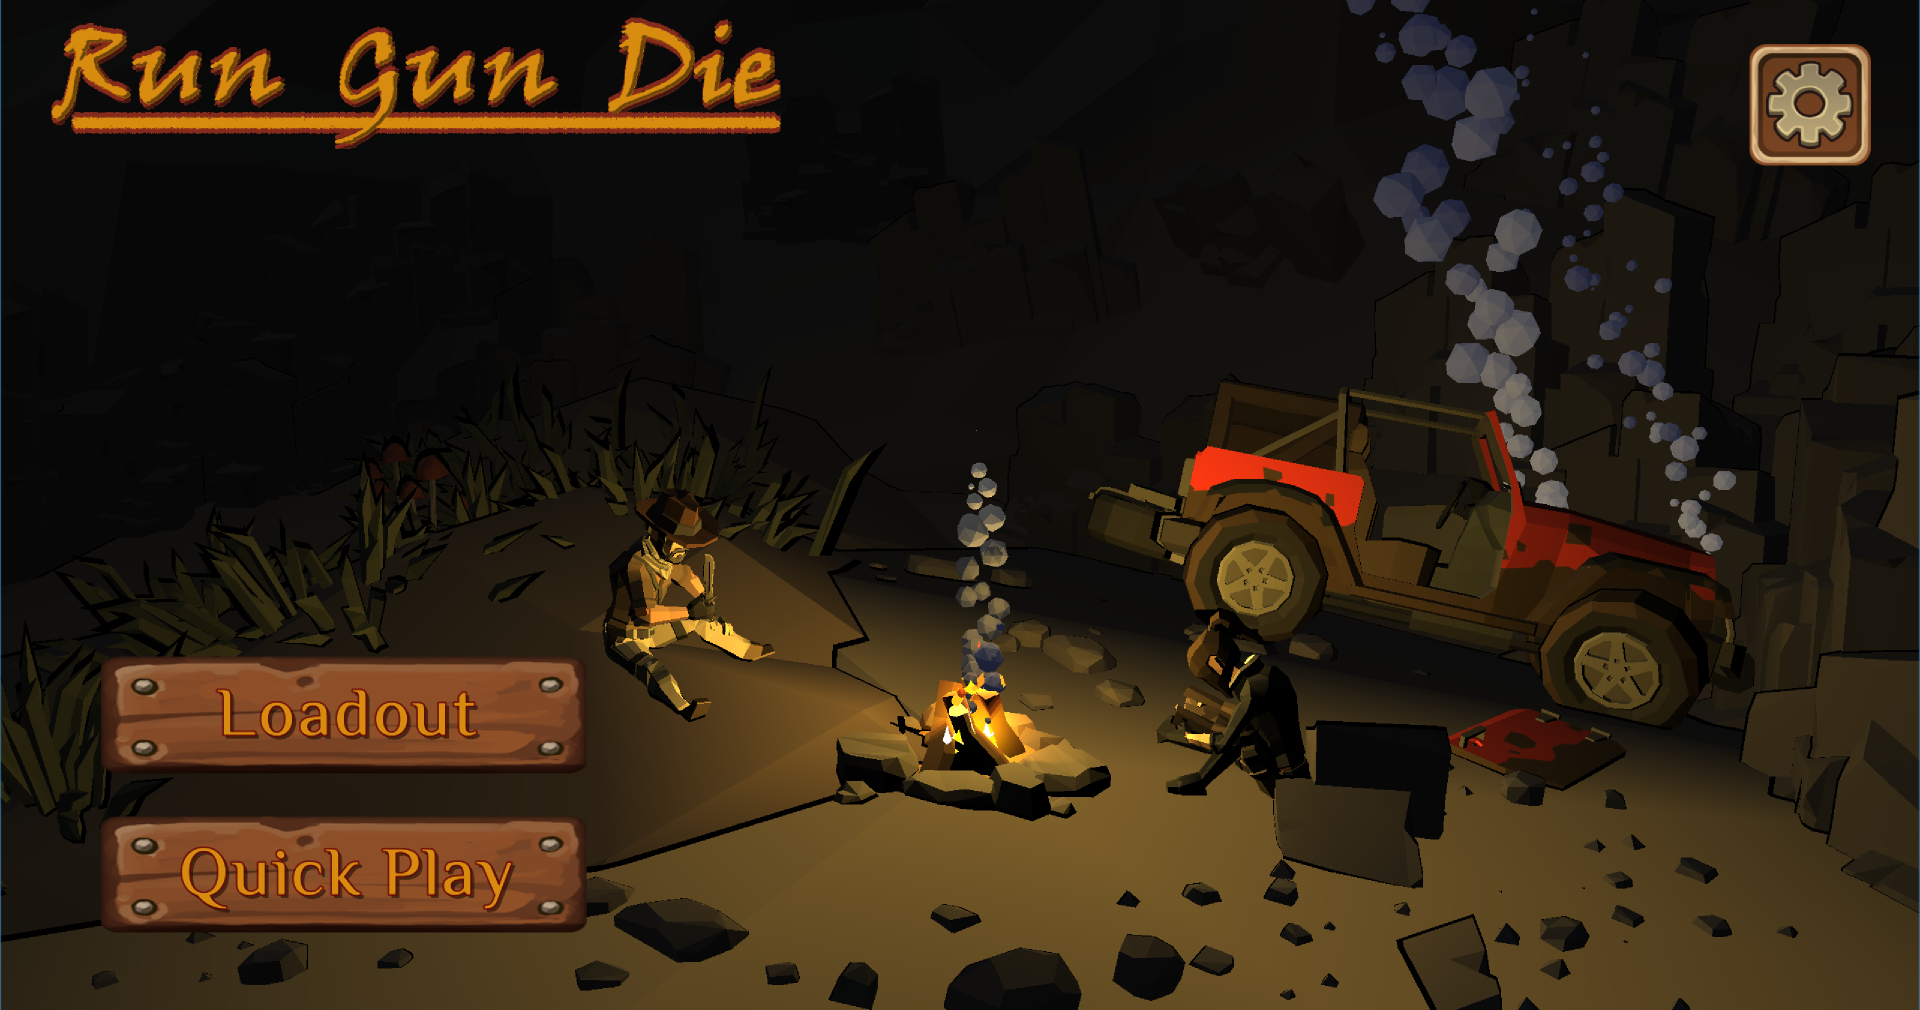 Run Gun Die screenshot game